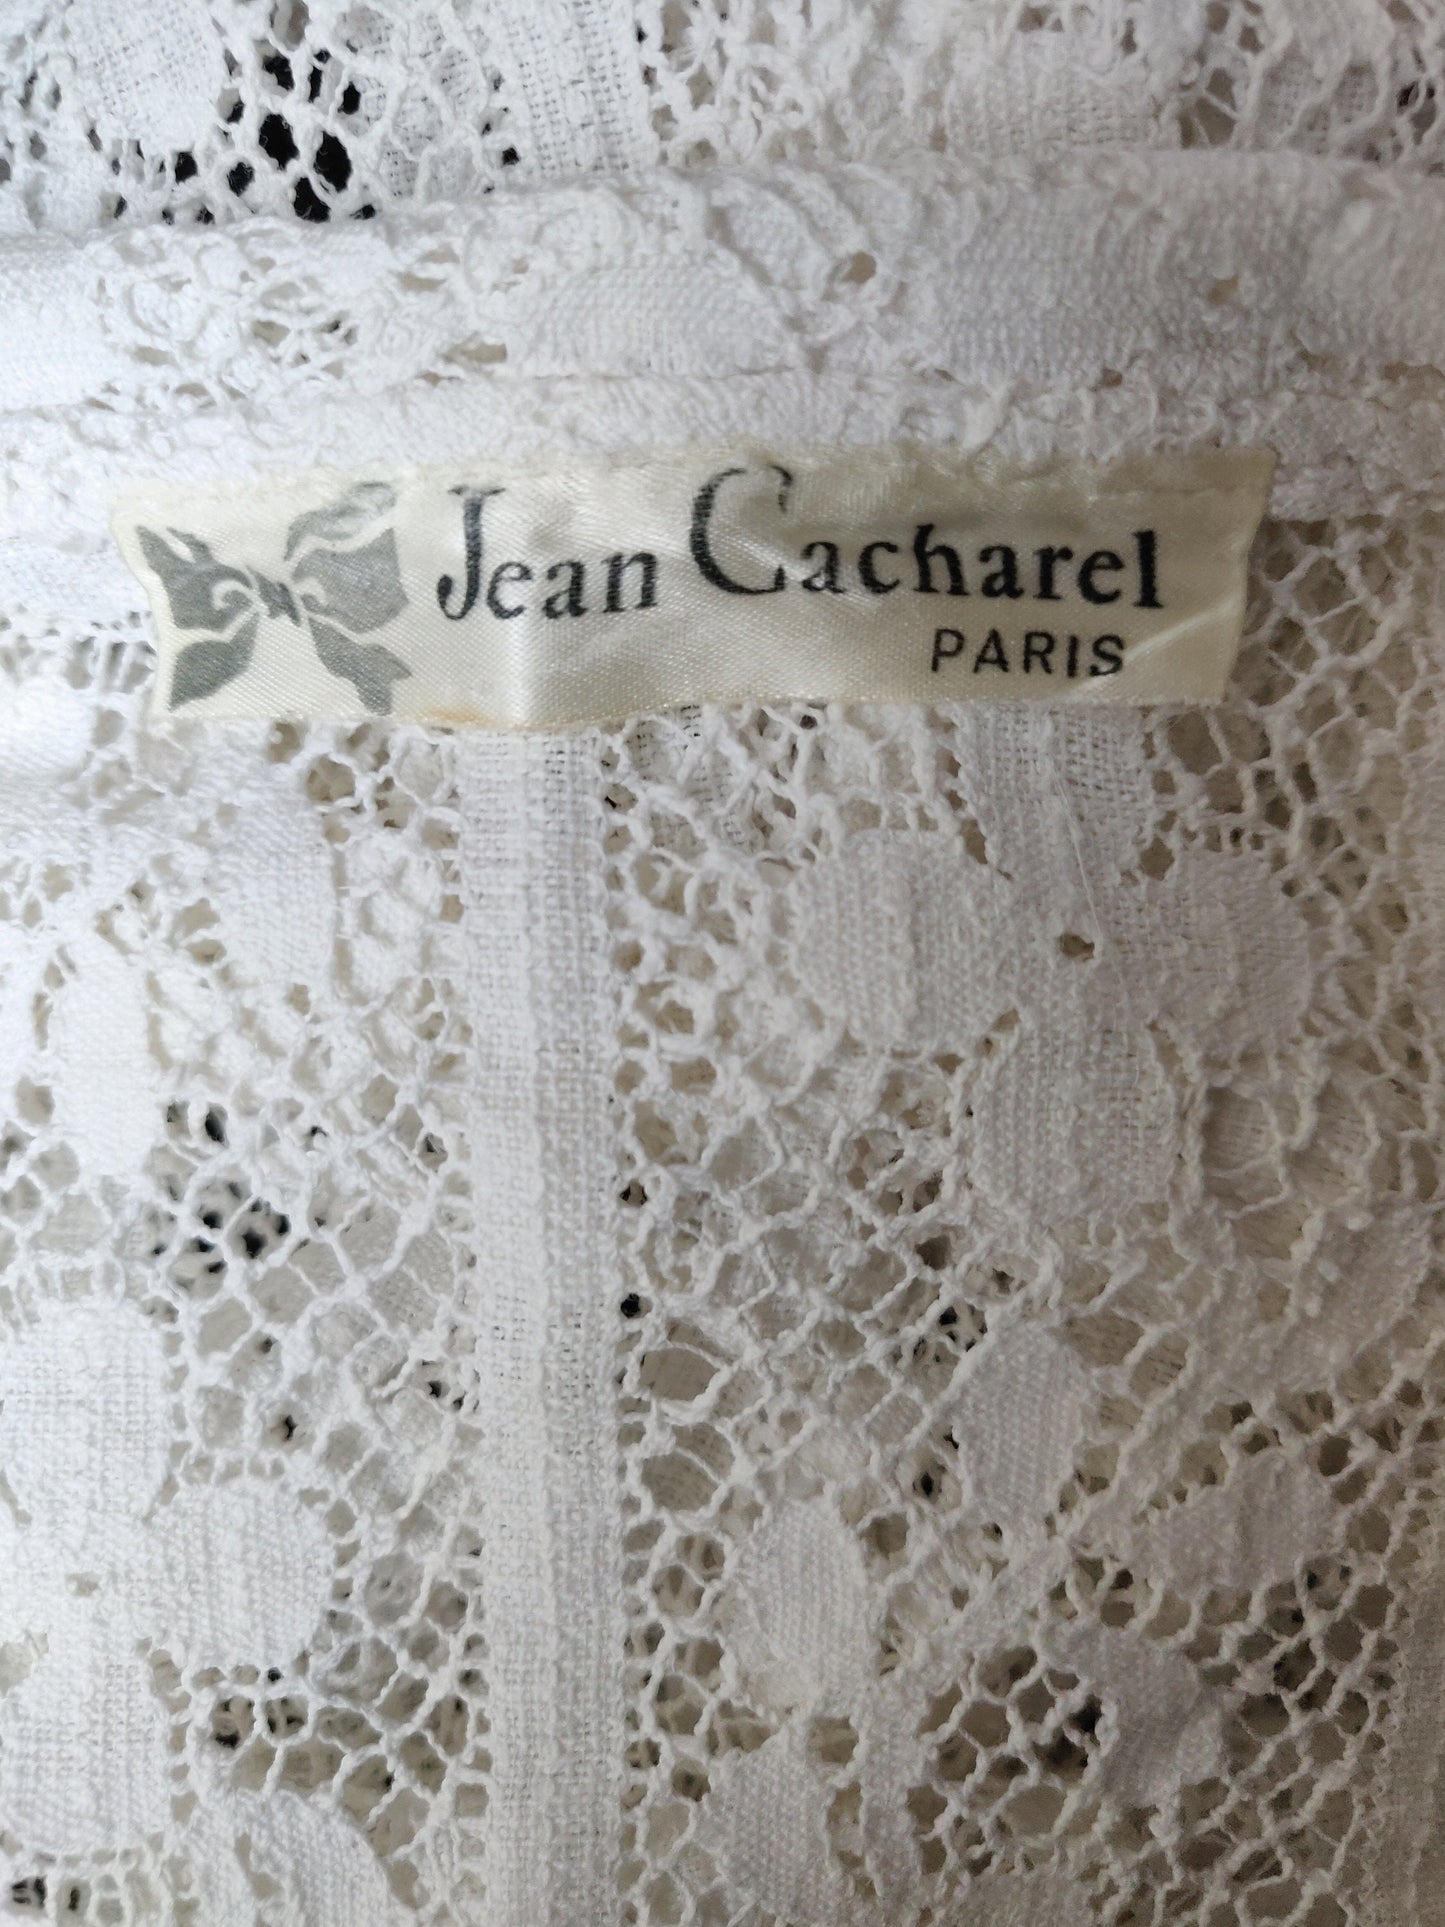 Rare 1960s Jean Cacharel Lace Blouse